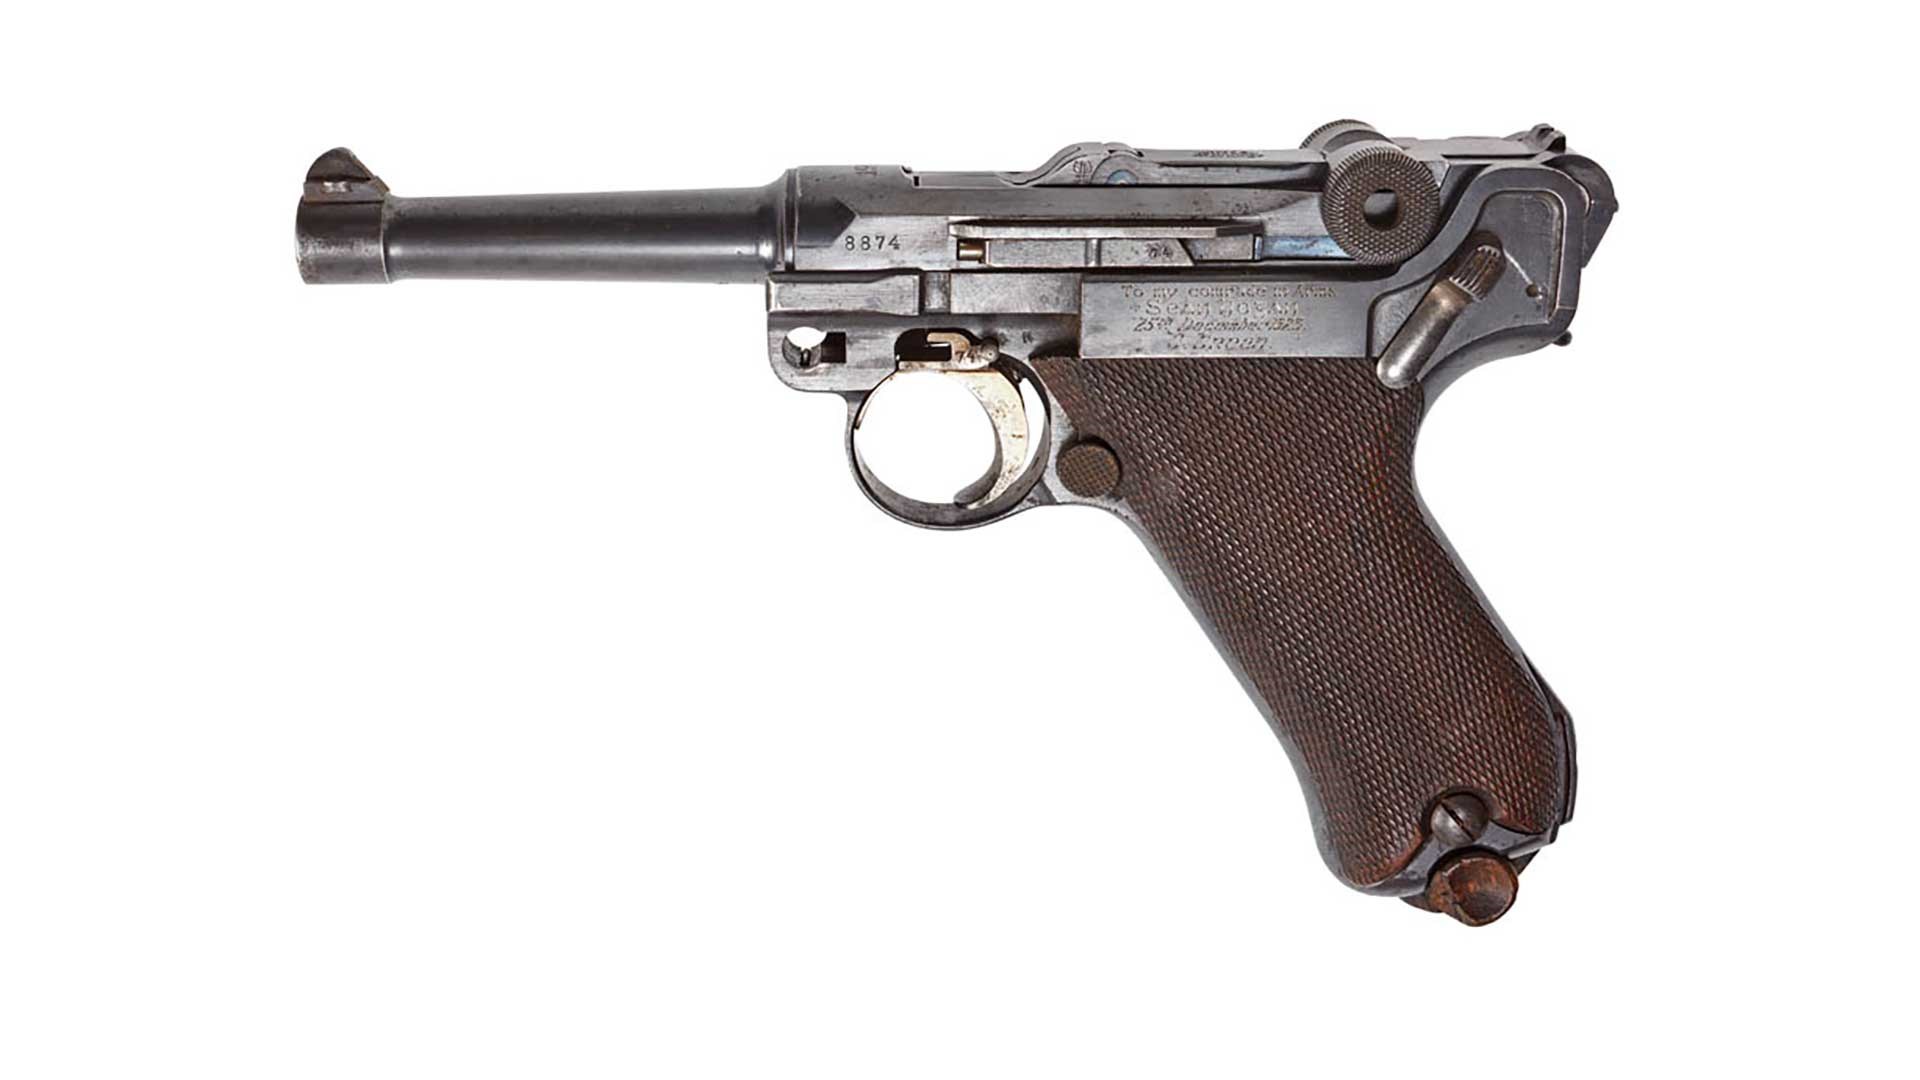 Left side of a Luger P08 pistol belonging to Dan Breen.